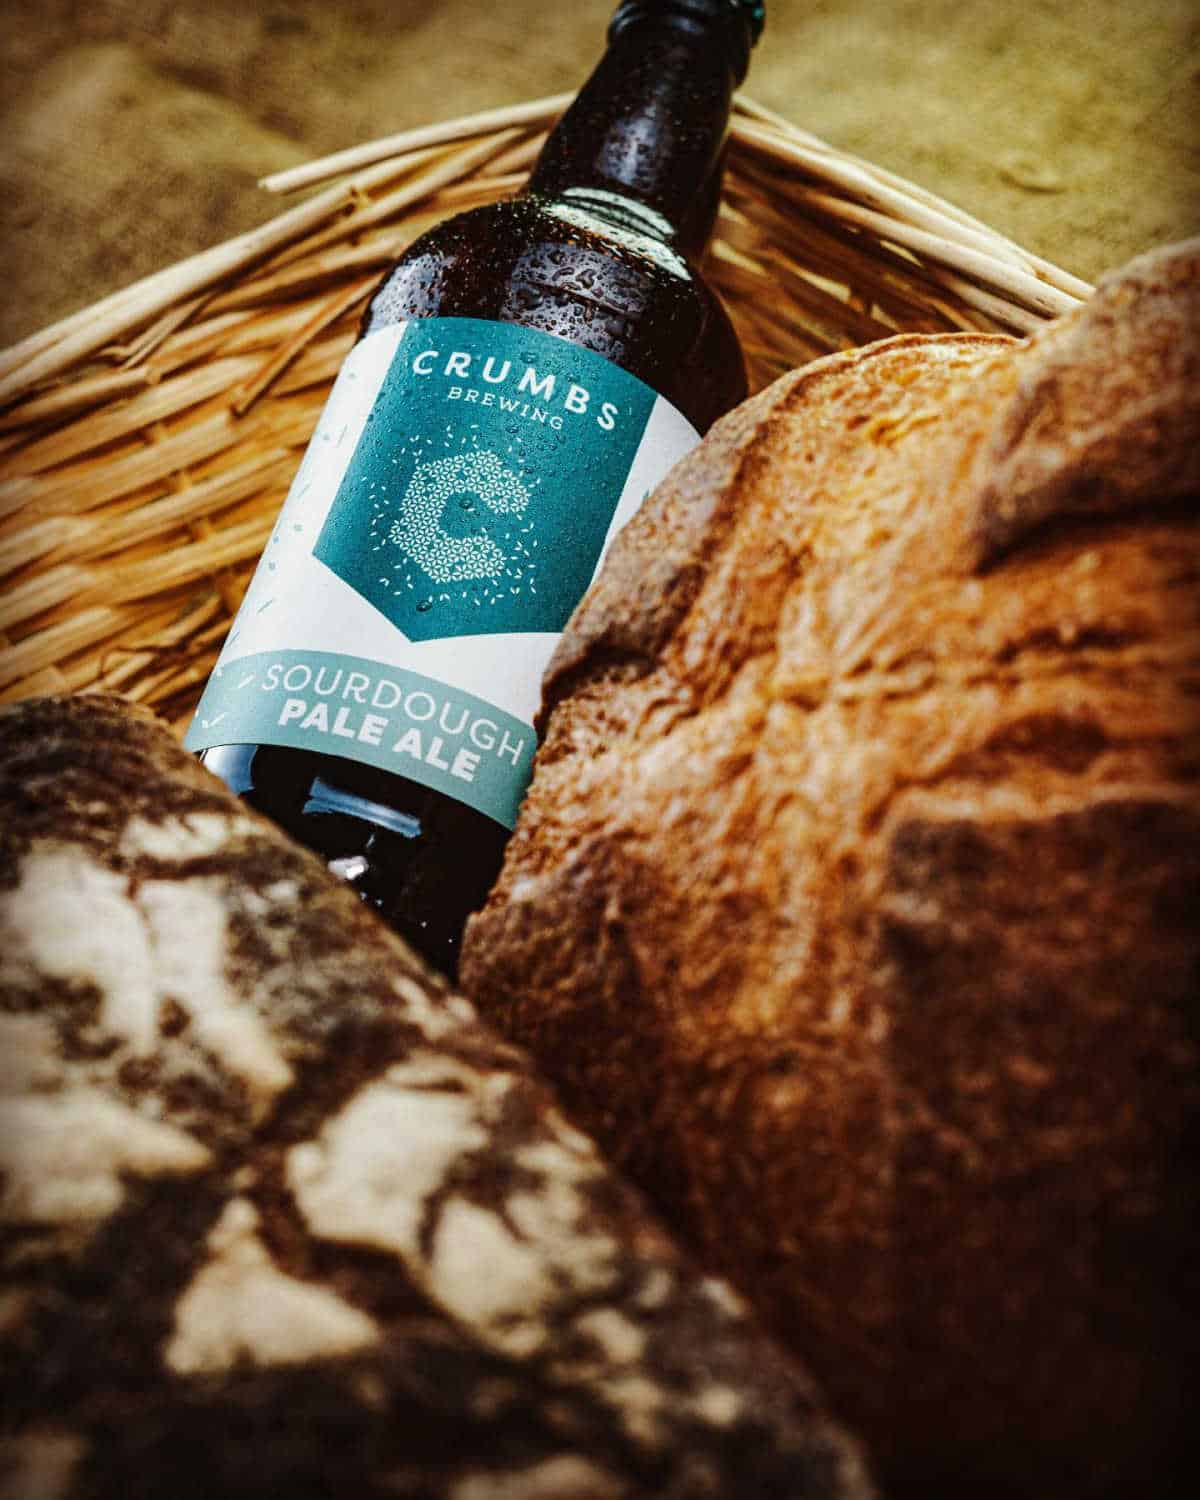 Bottle of Crumbs Brewing Sourdough Pale Ale nestled in a basket of bread.